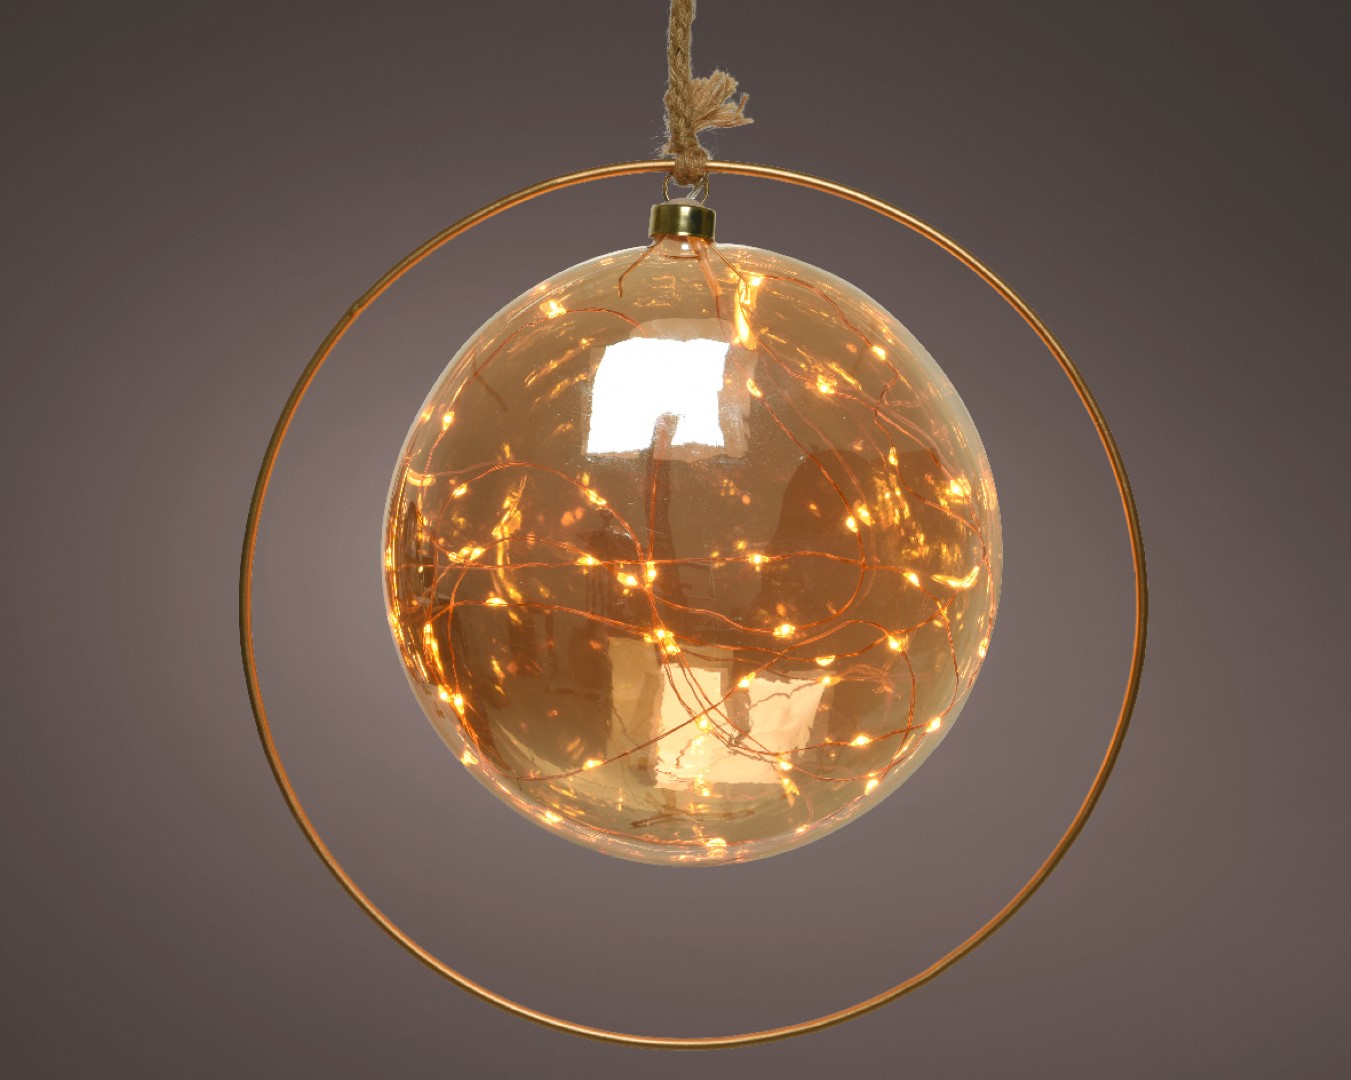 Kerstbal met jute touw en koperen ring - 30 LED lampjes - 20cm - Amber glas